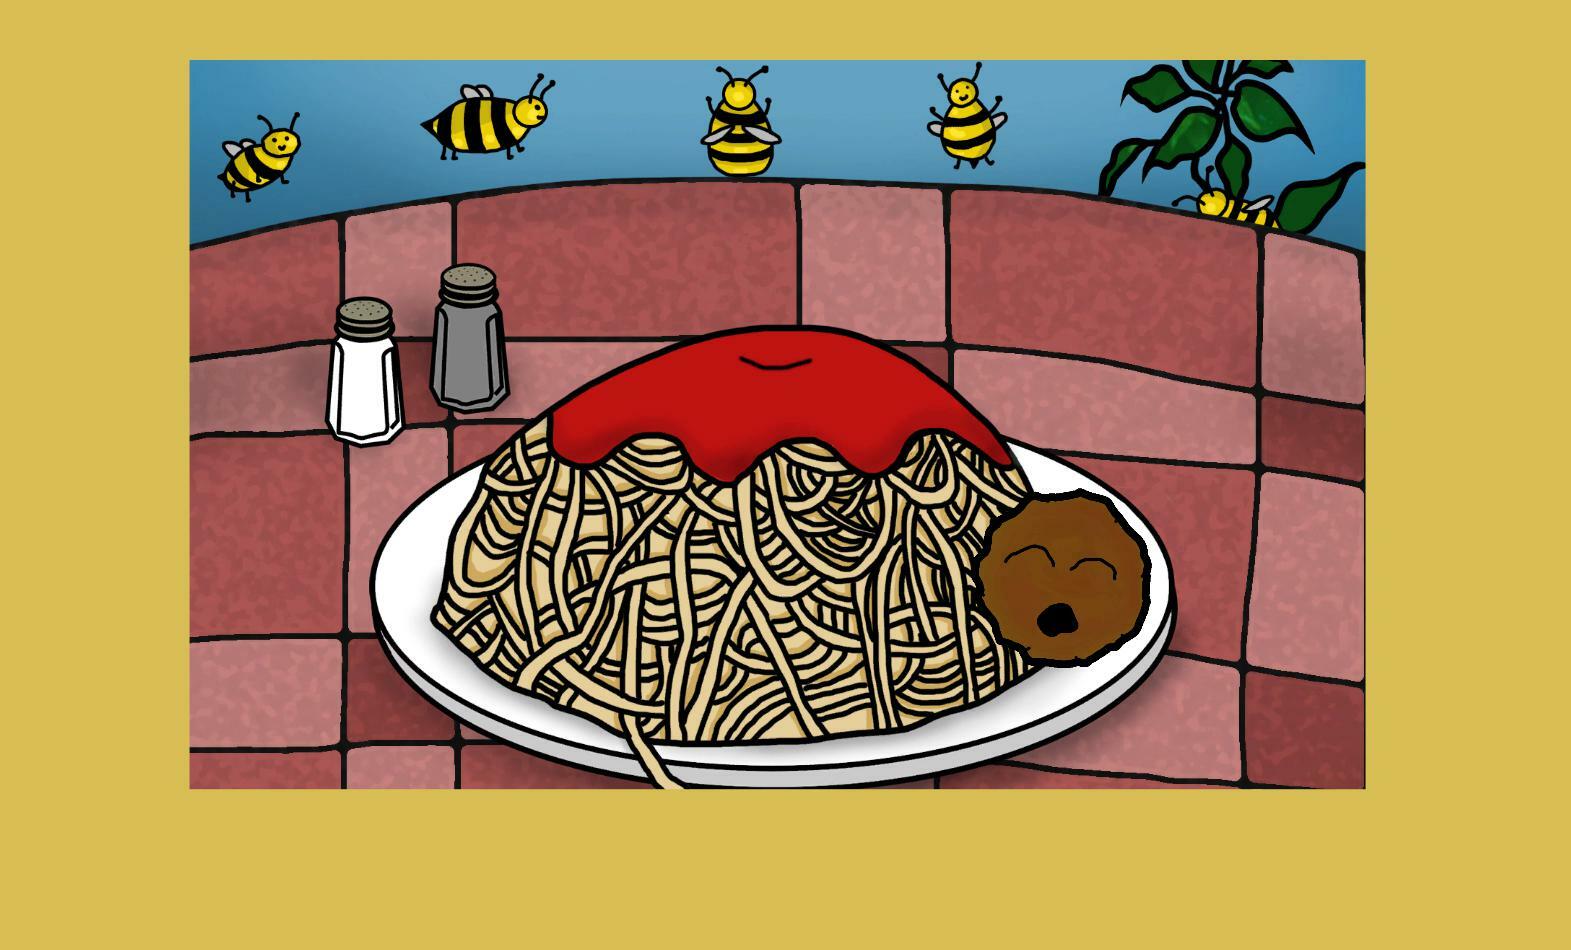 Играй спагетти